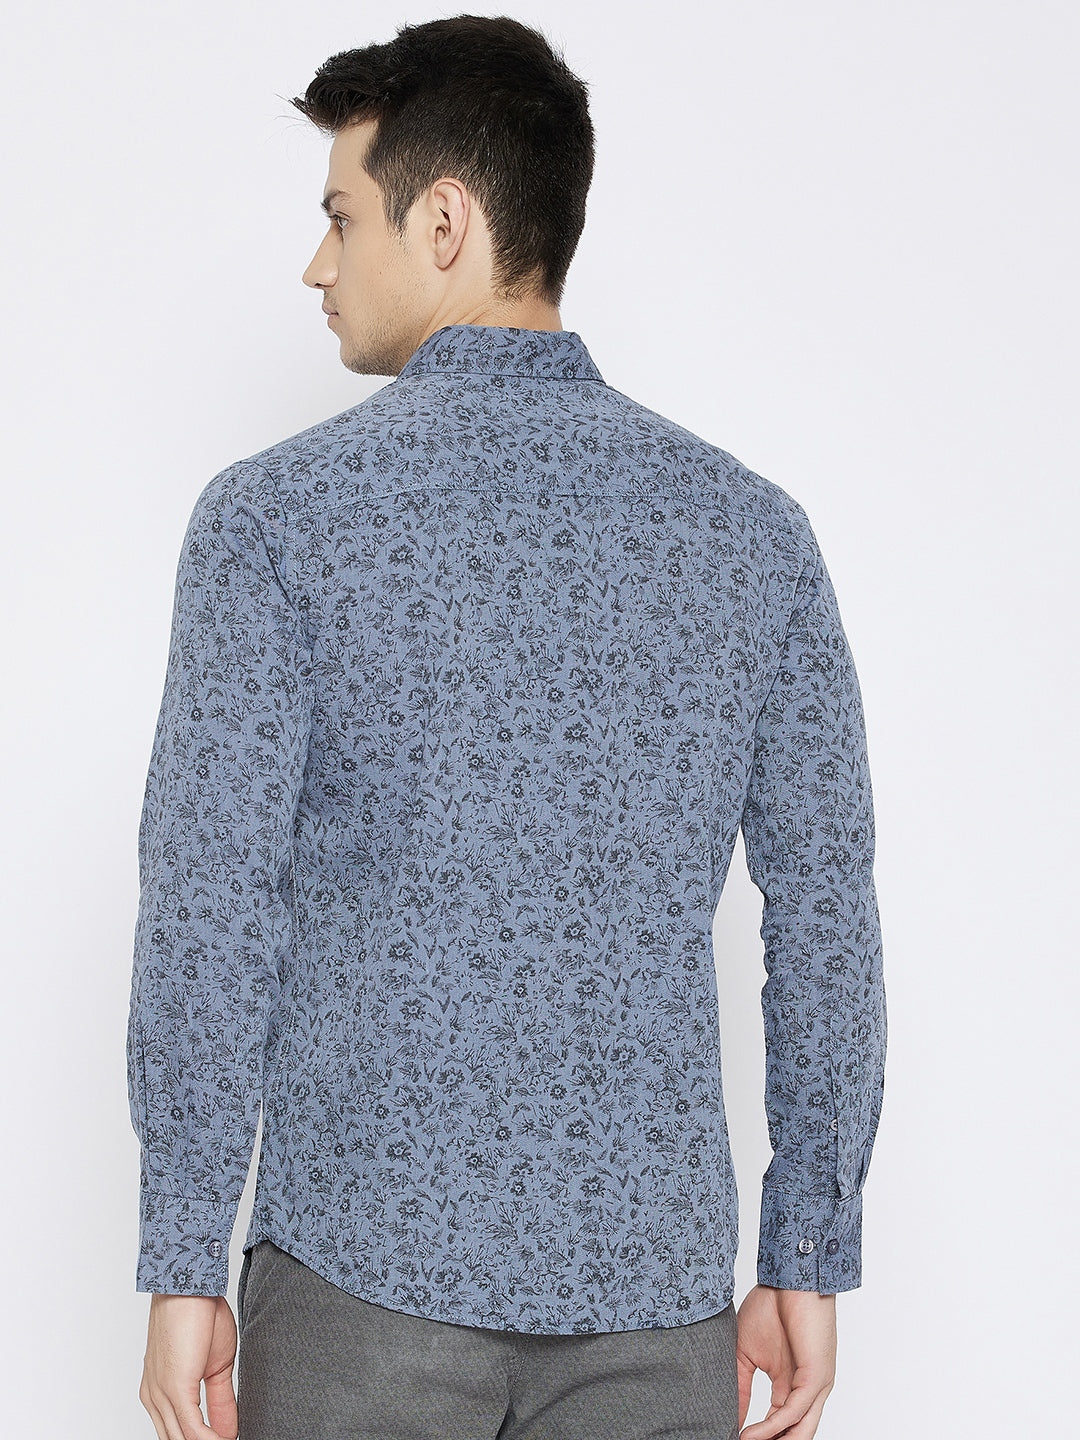 Blue Floral Printed Slim Fit shirt - Men Shirts